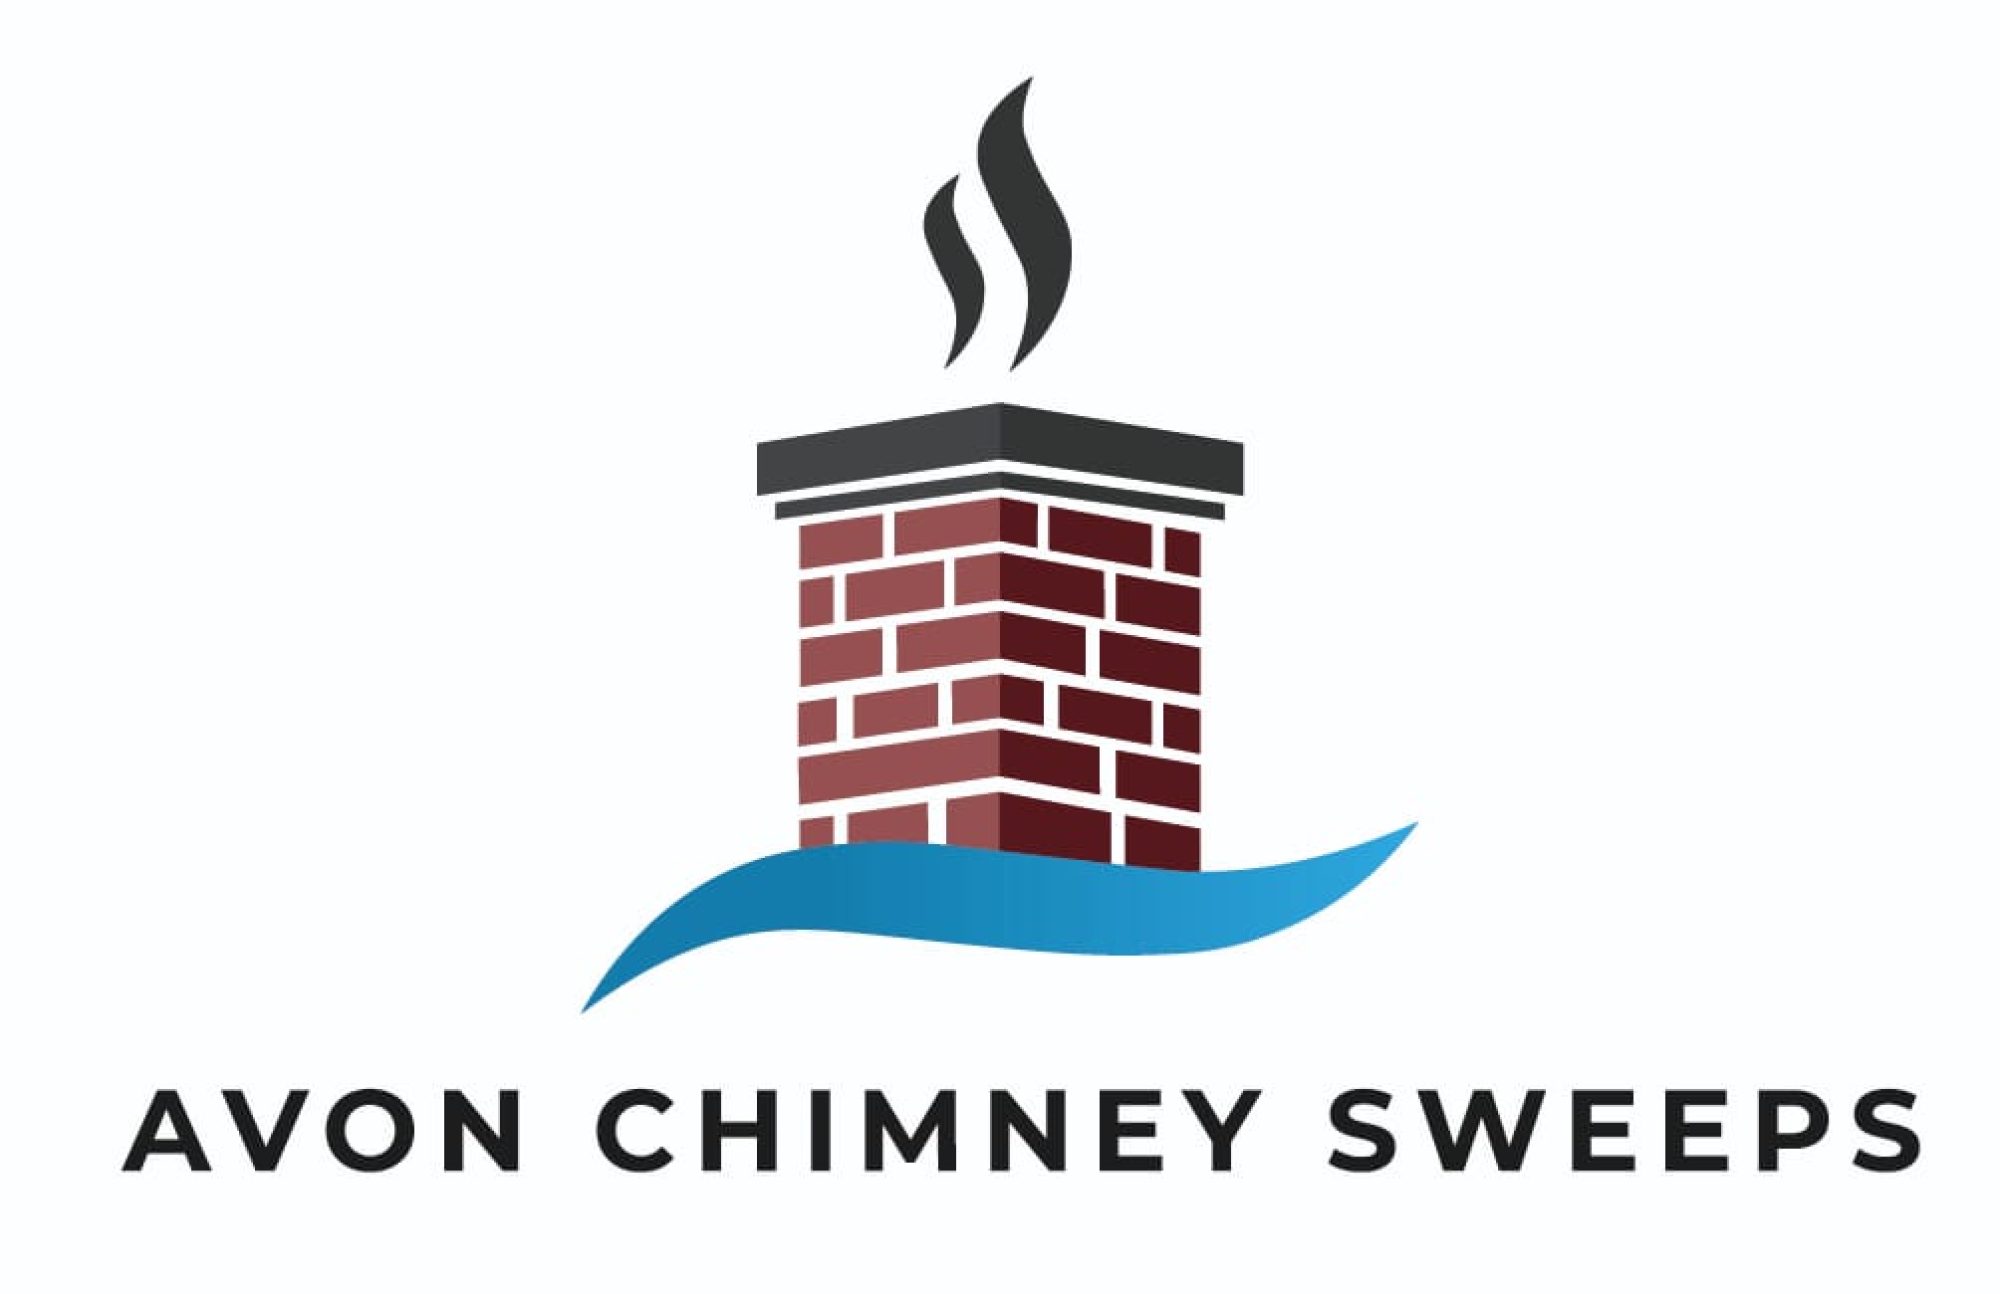 Avon Chimney sweeps